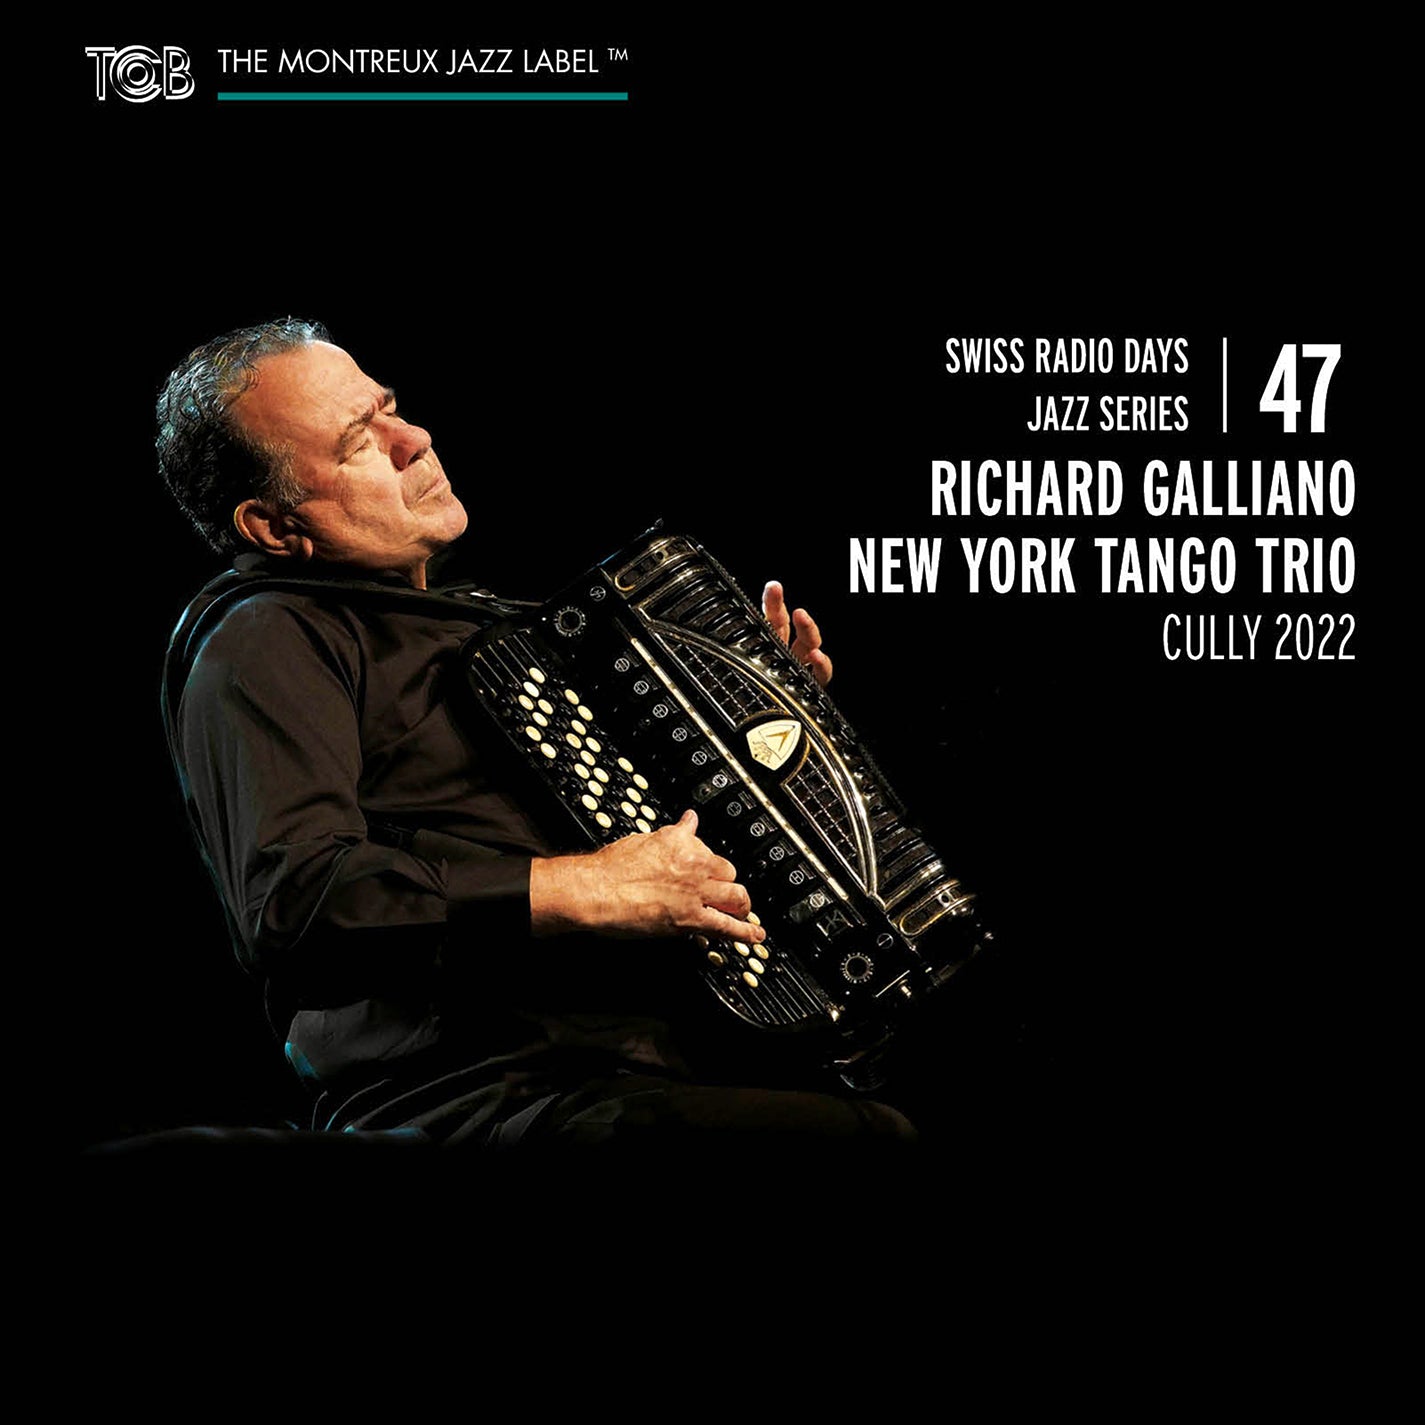 Swiss Radio Days, Vol. 47 - Cully 2022 / Richard Galliano New York Tango Trio